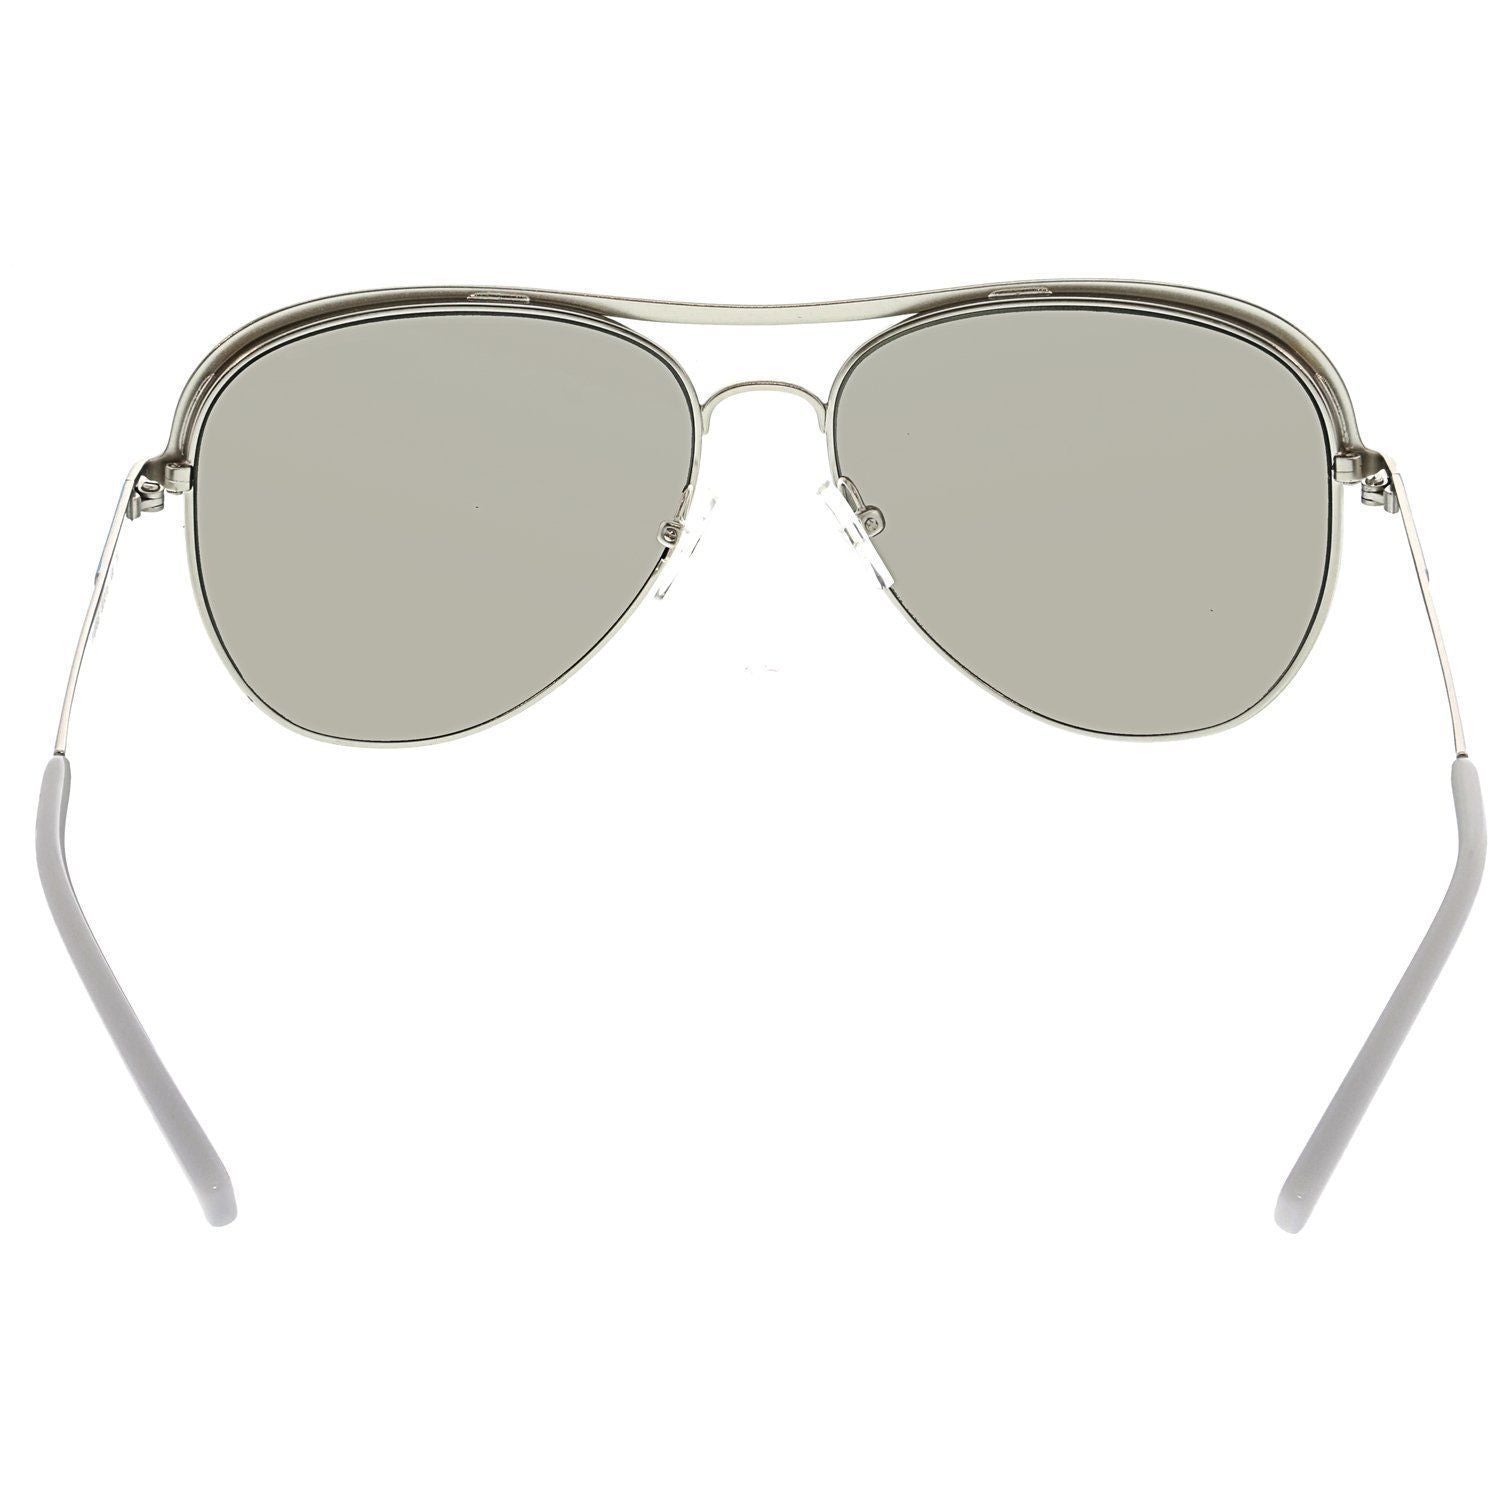 Michael Kors Women's Vivianna Aviator Sunglasses (MK1012 58mm) - Gold or Silver